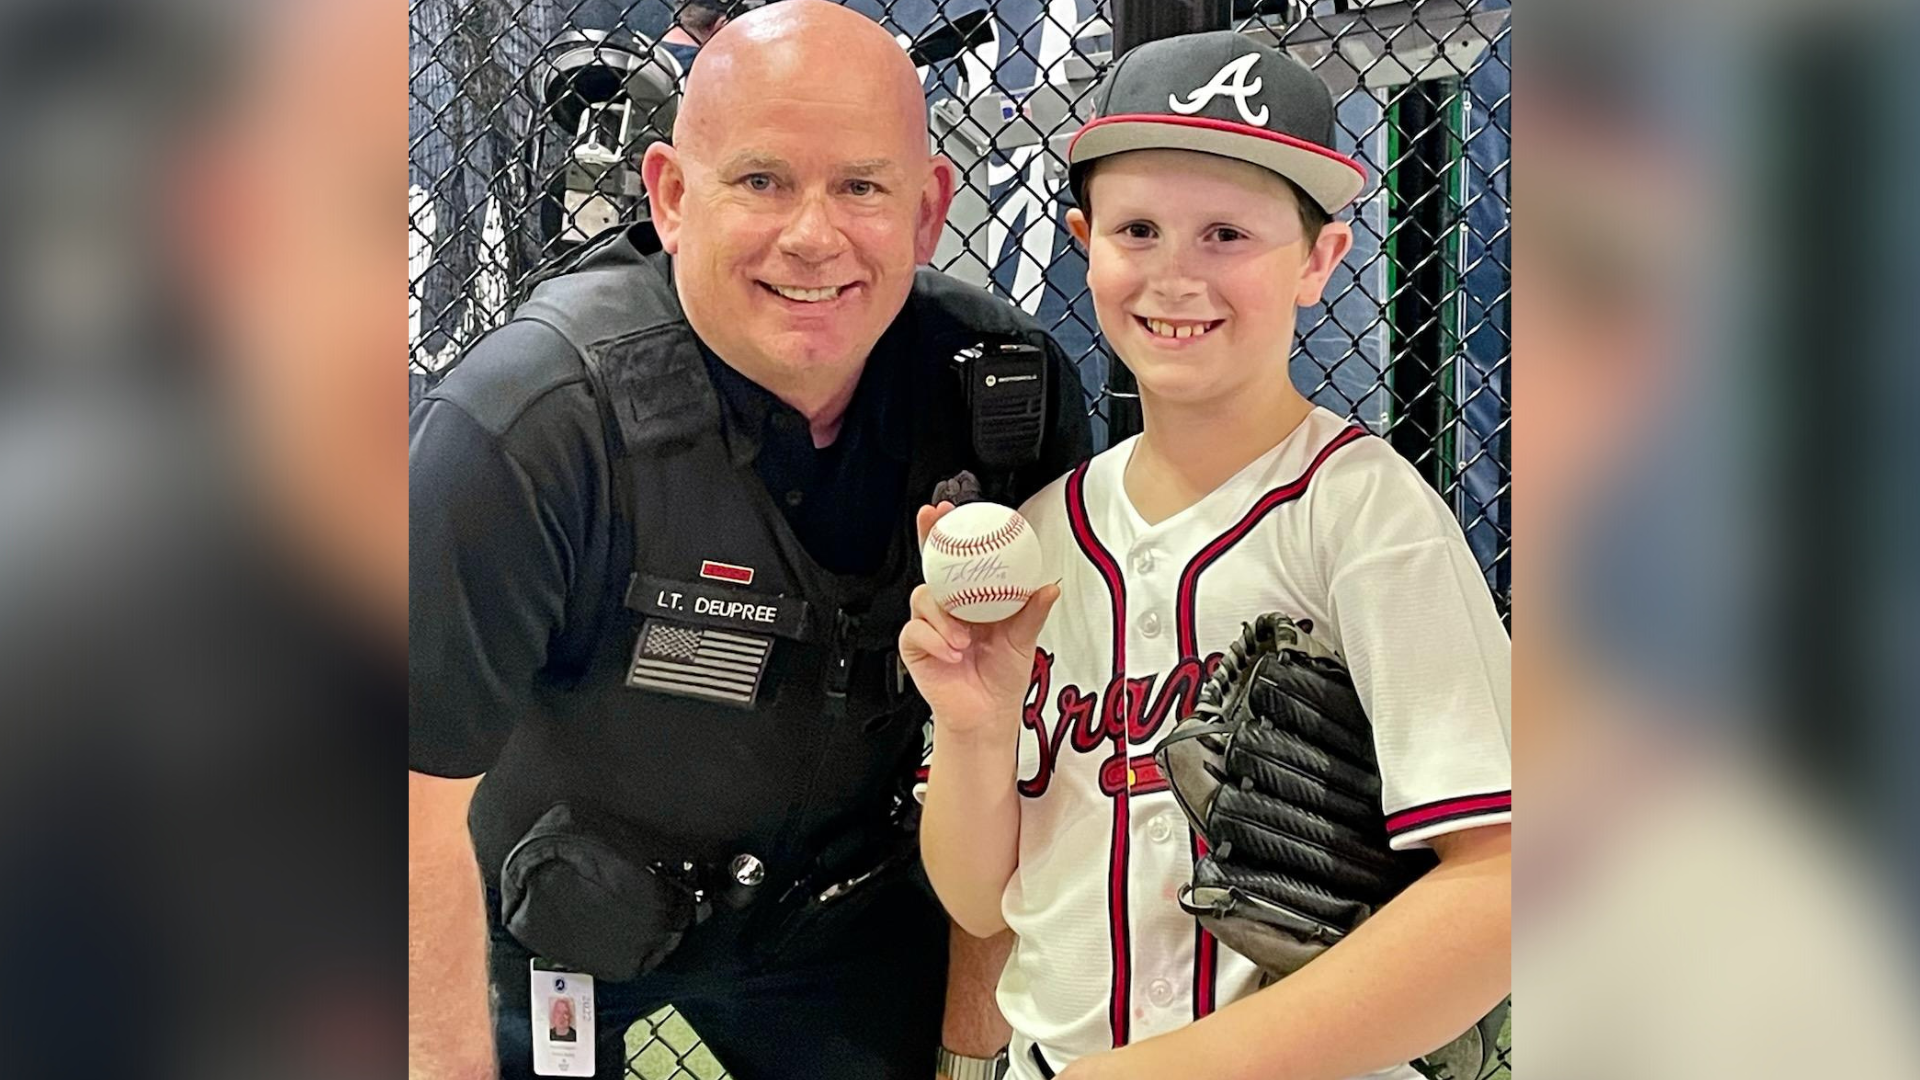 Cobb officer surprises young Tyler Matzek fan with autographed